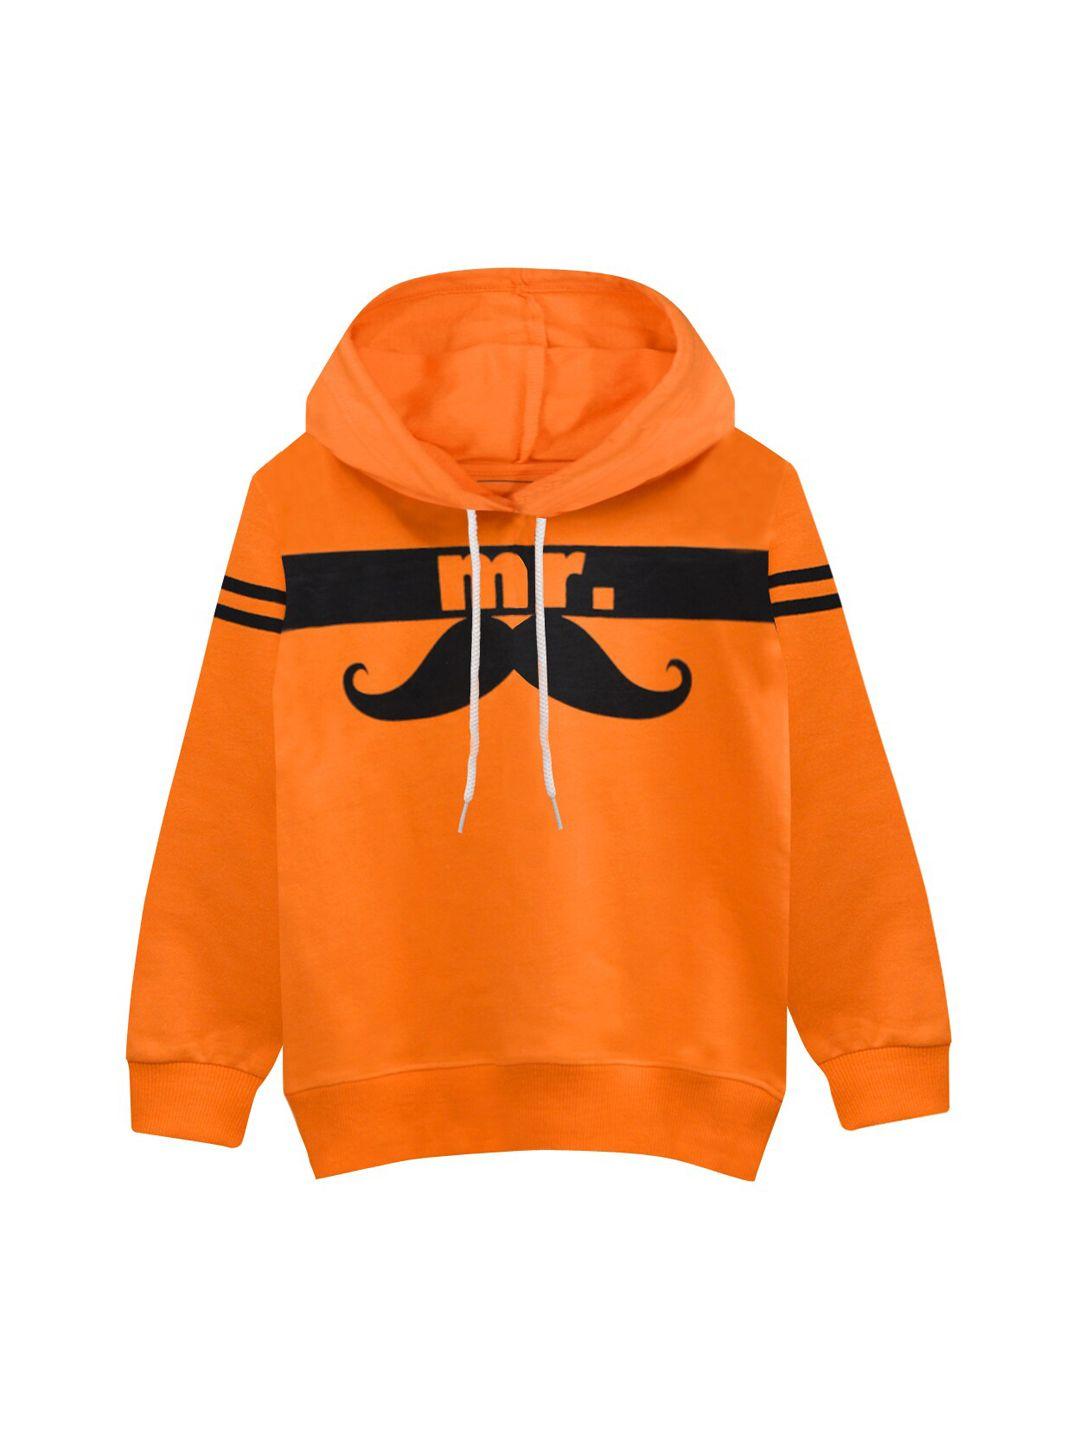 a t u n boys orange hooded sweatshirt